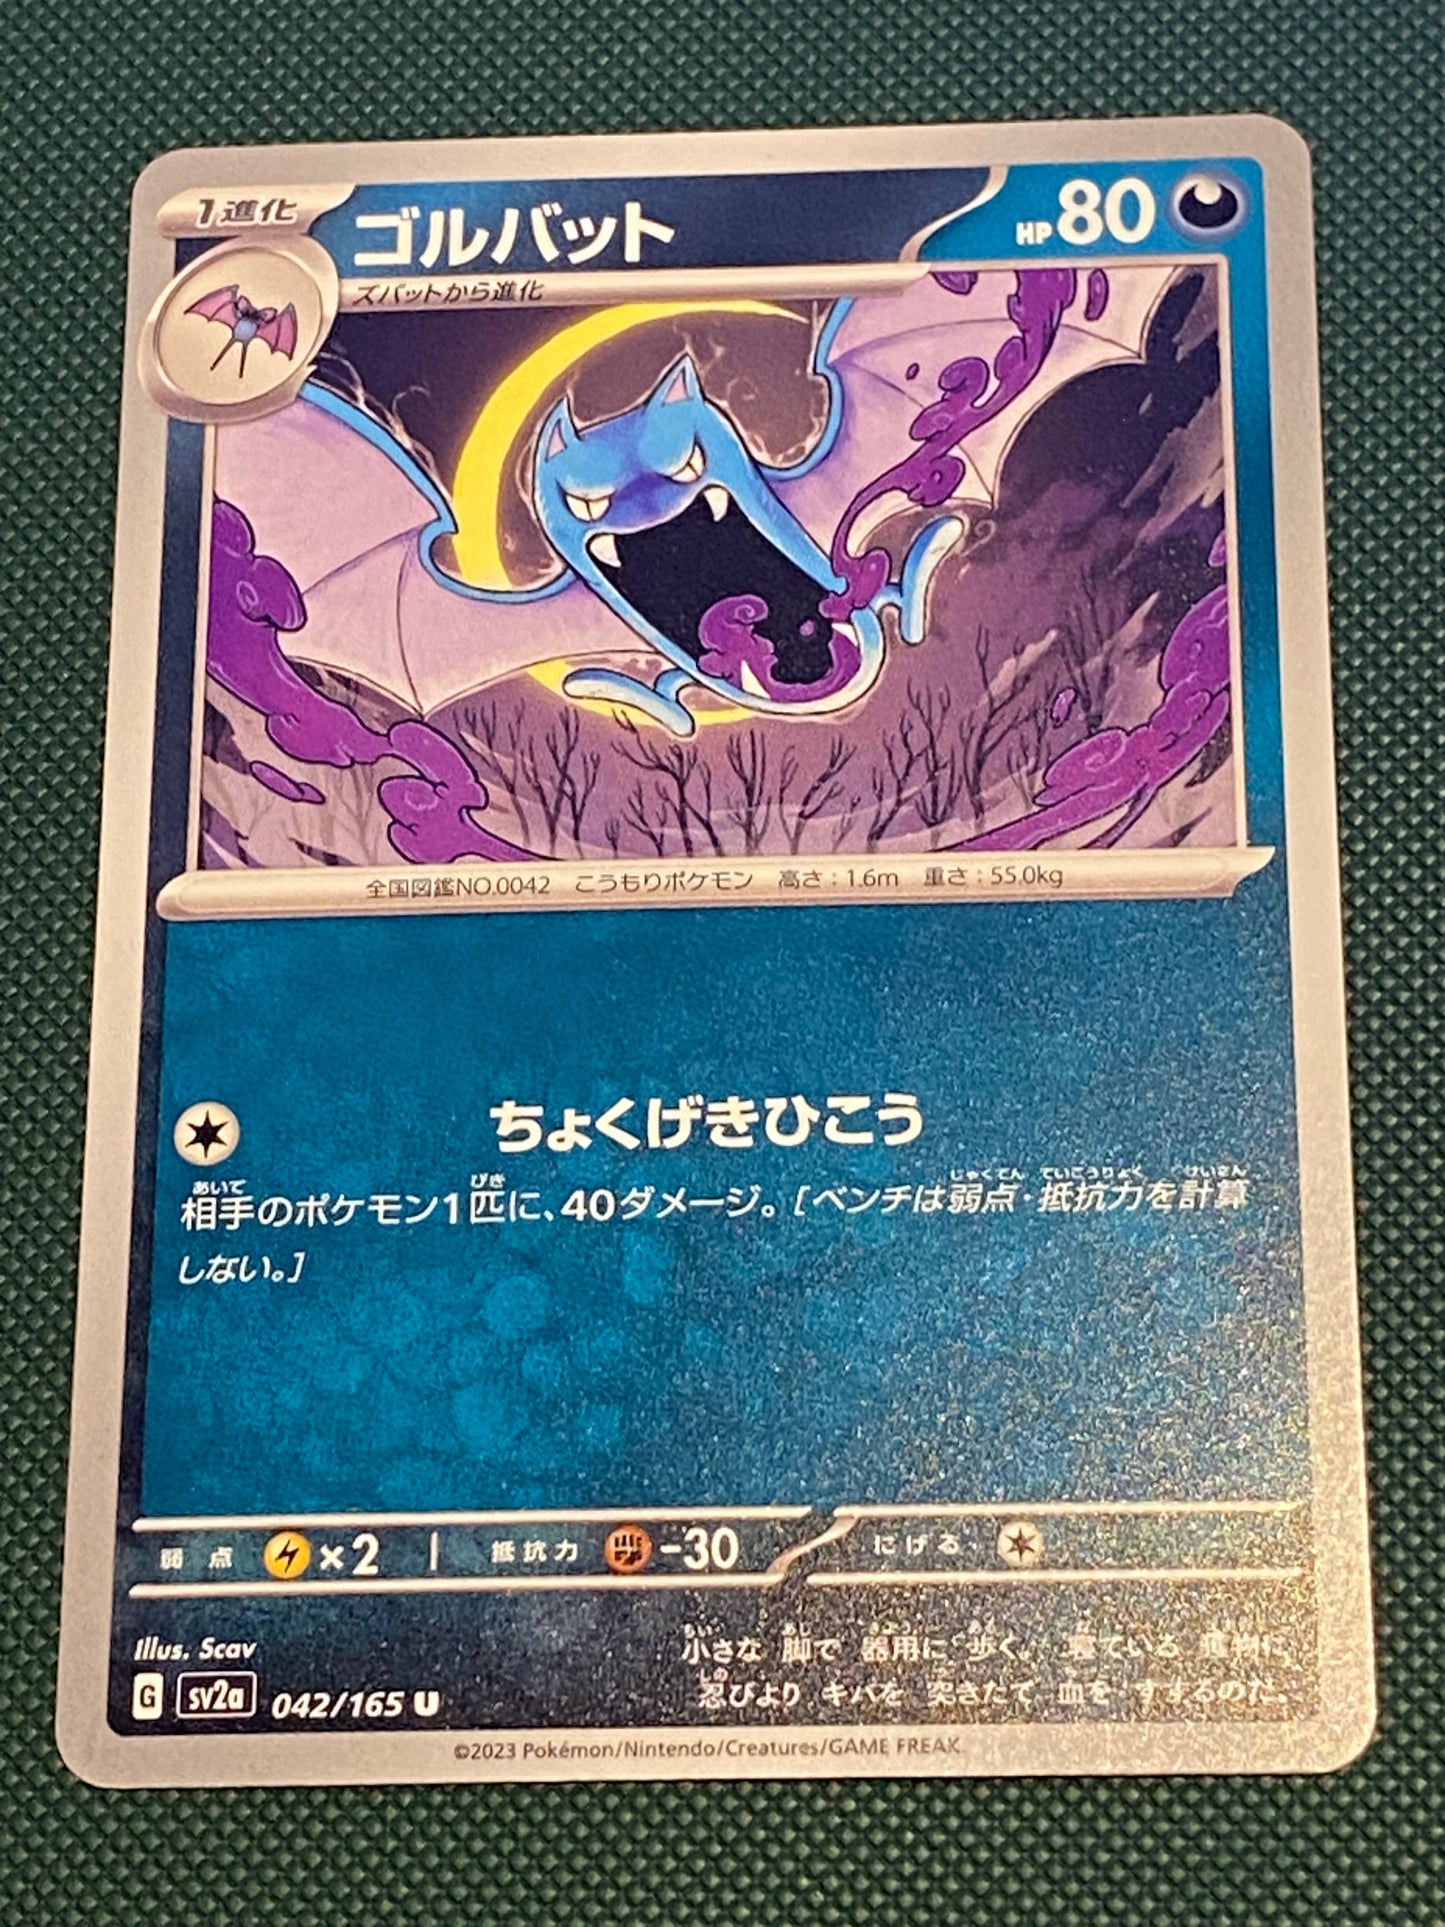 Golbat - Pokémon Card 151 Japanese